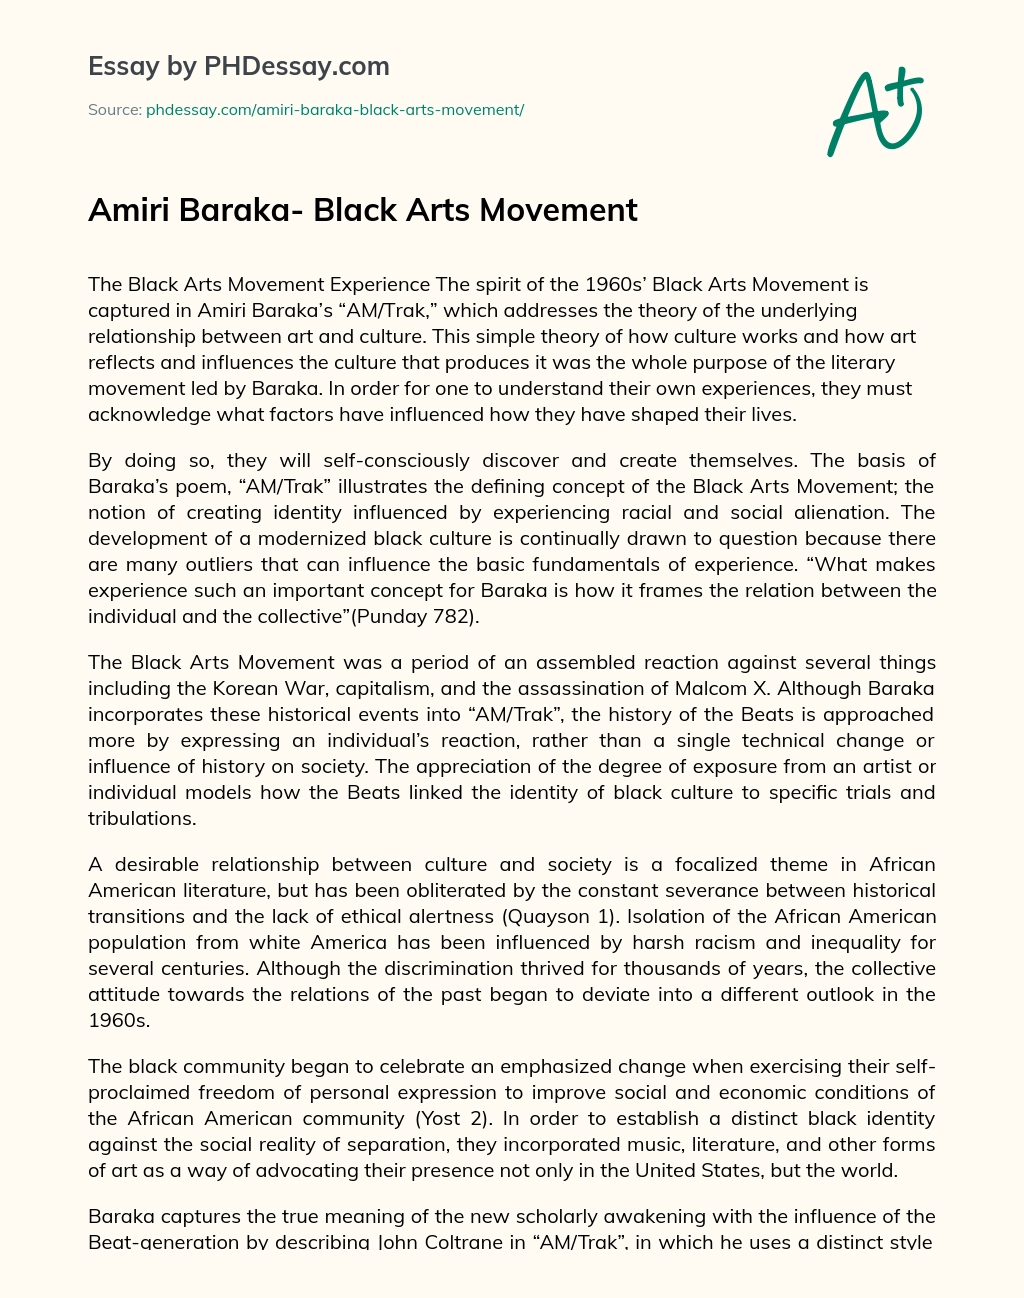 Amiri Baraka- Black Arts Movement essay